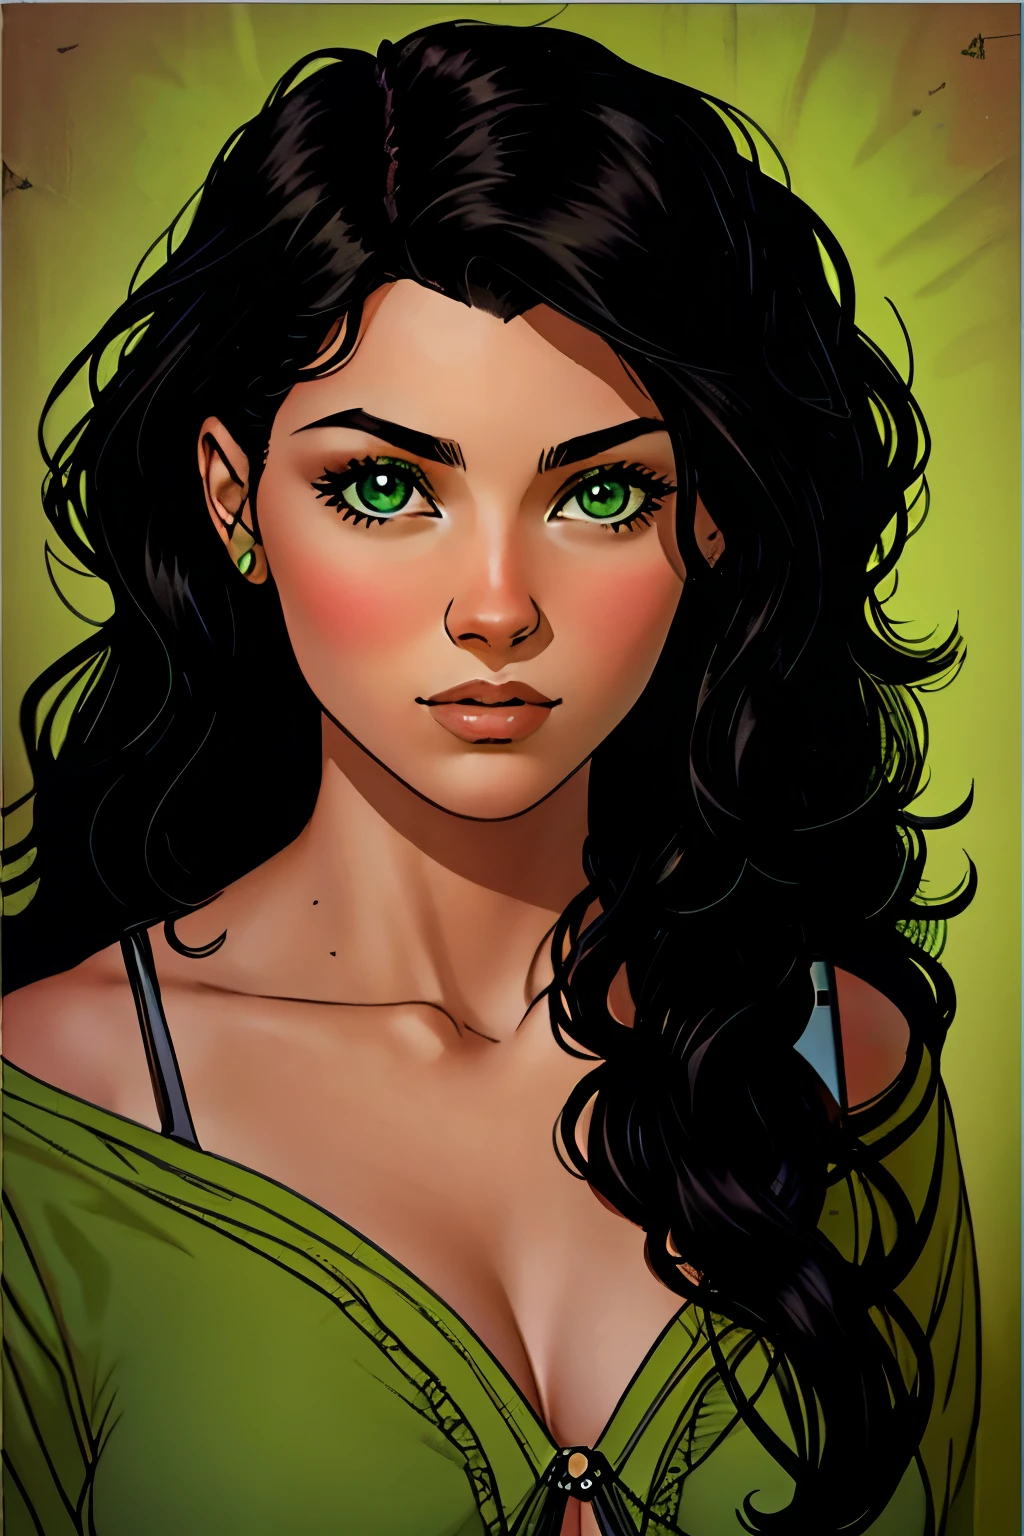 1 garota, cabelo preto longo e encaracolado, franja, olhos verdes, retrato